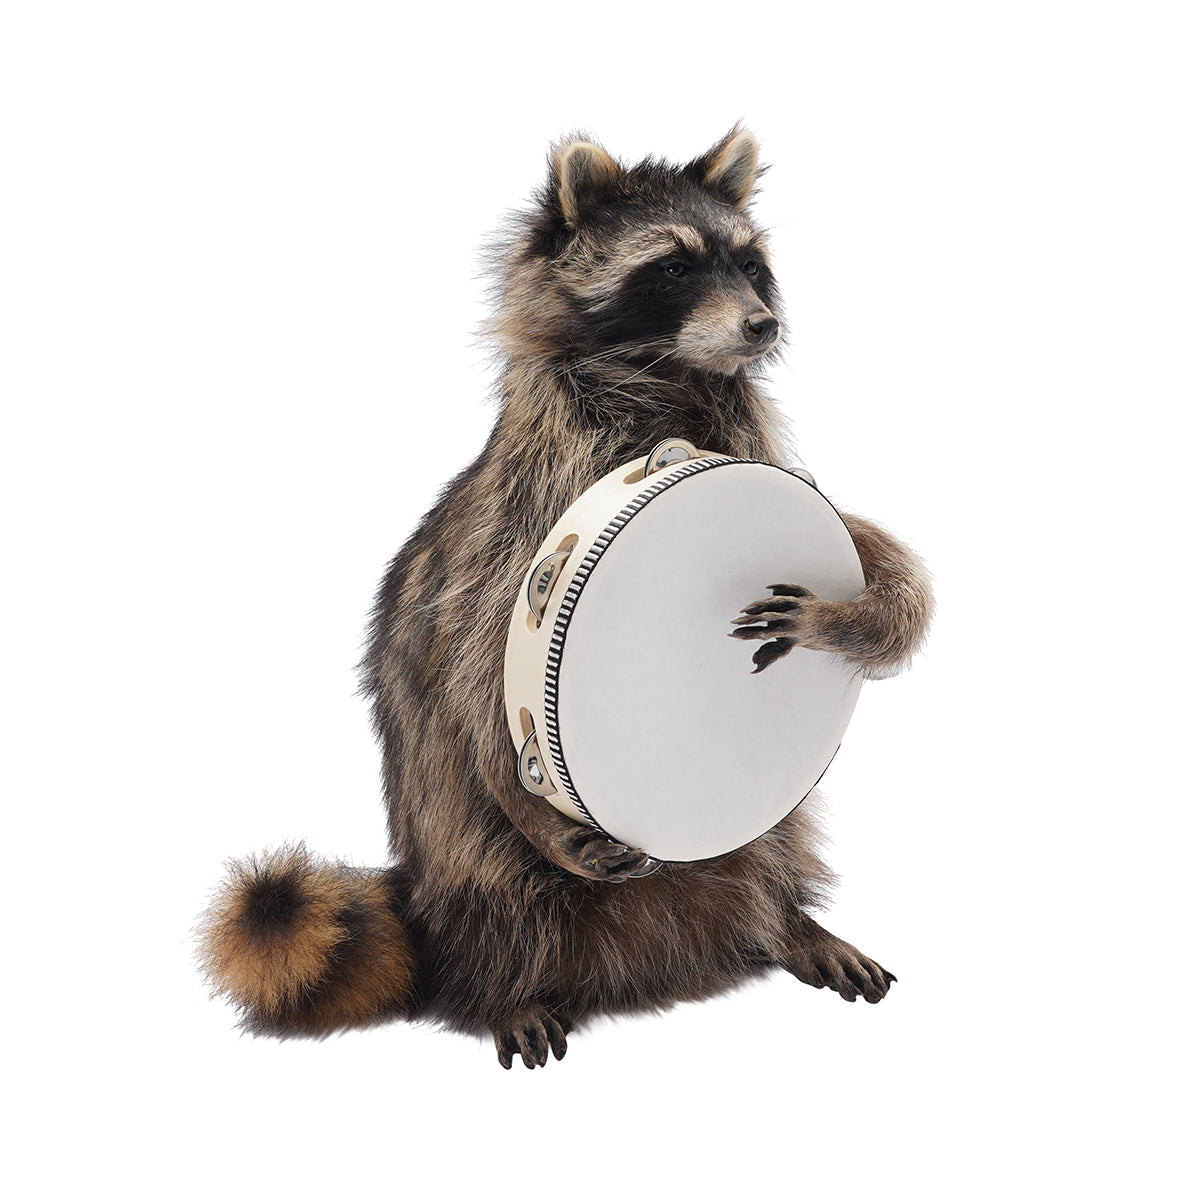 Raccoon Band Members